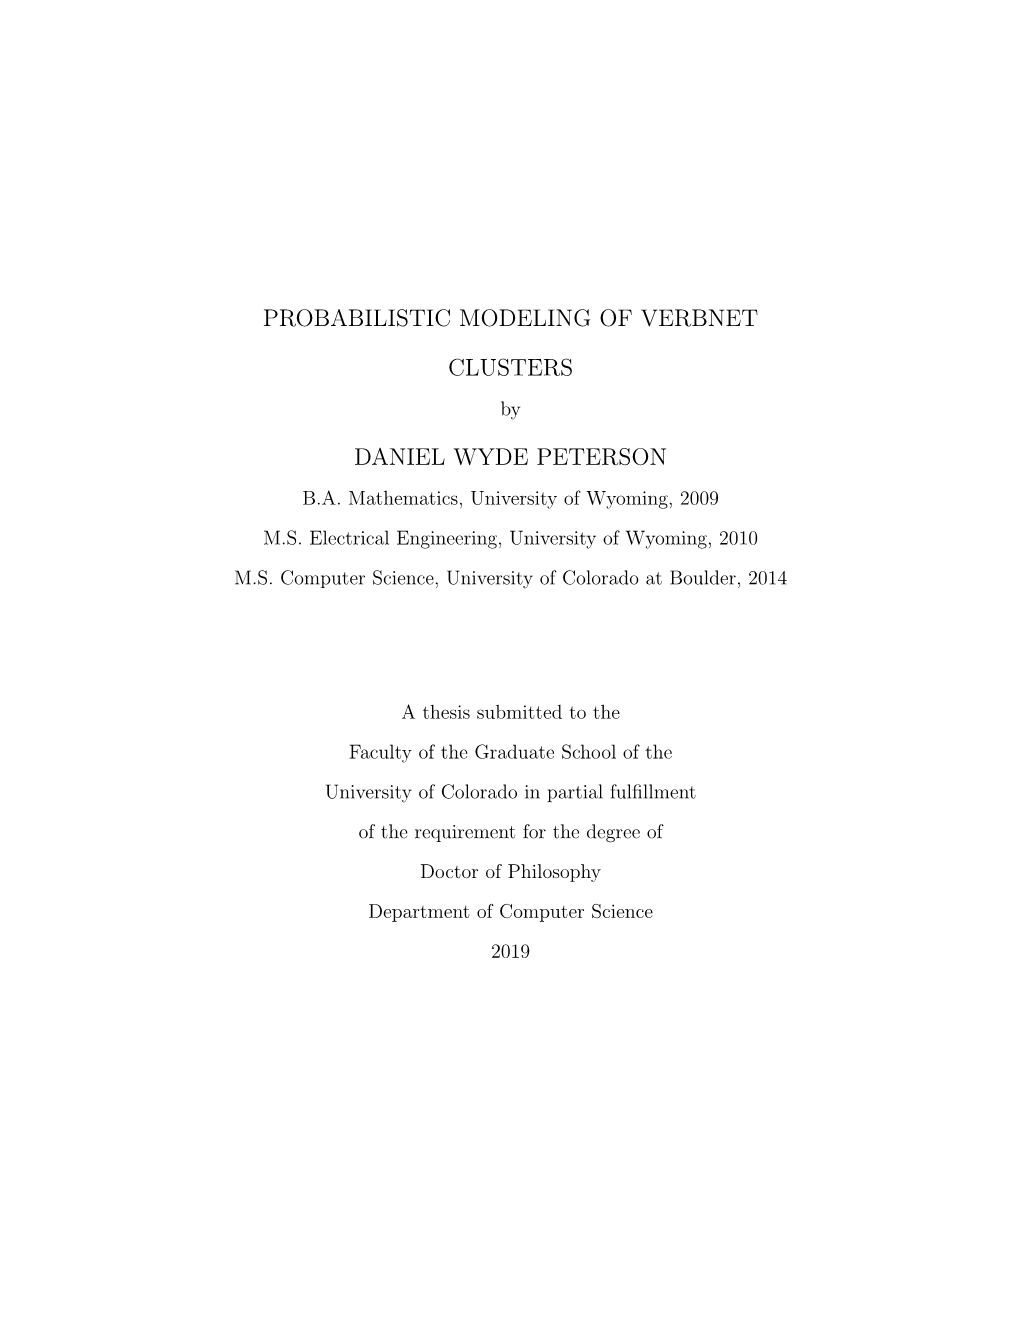 Probabilistic Modeling of Verbnet Clusters Daniel